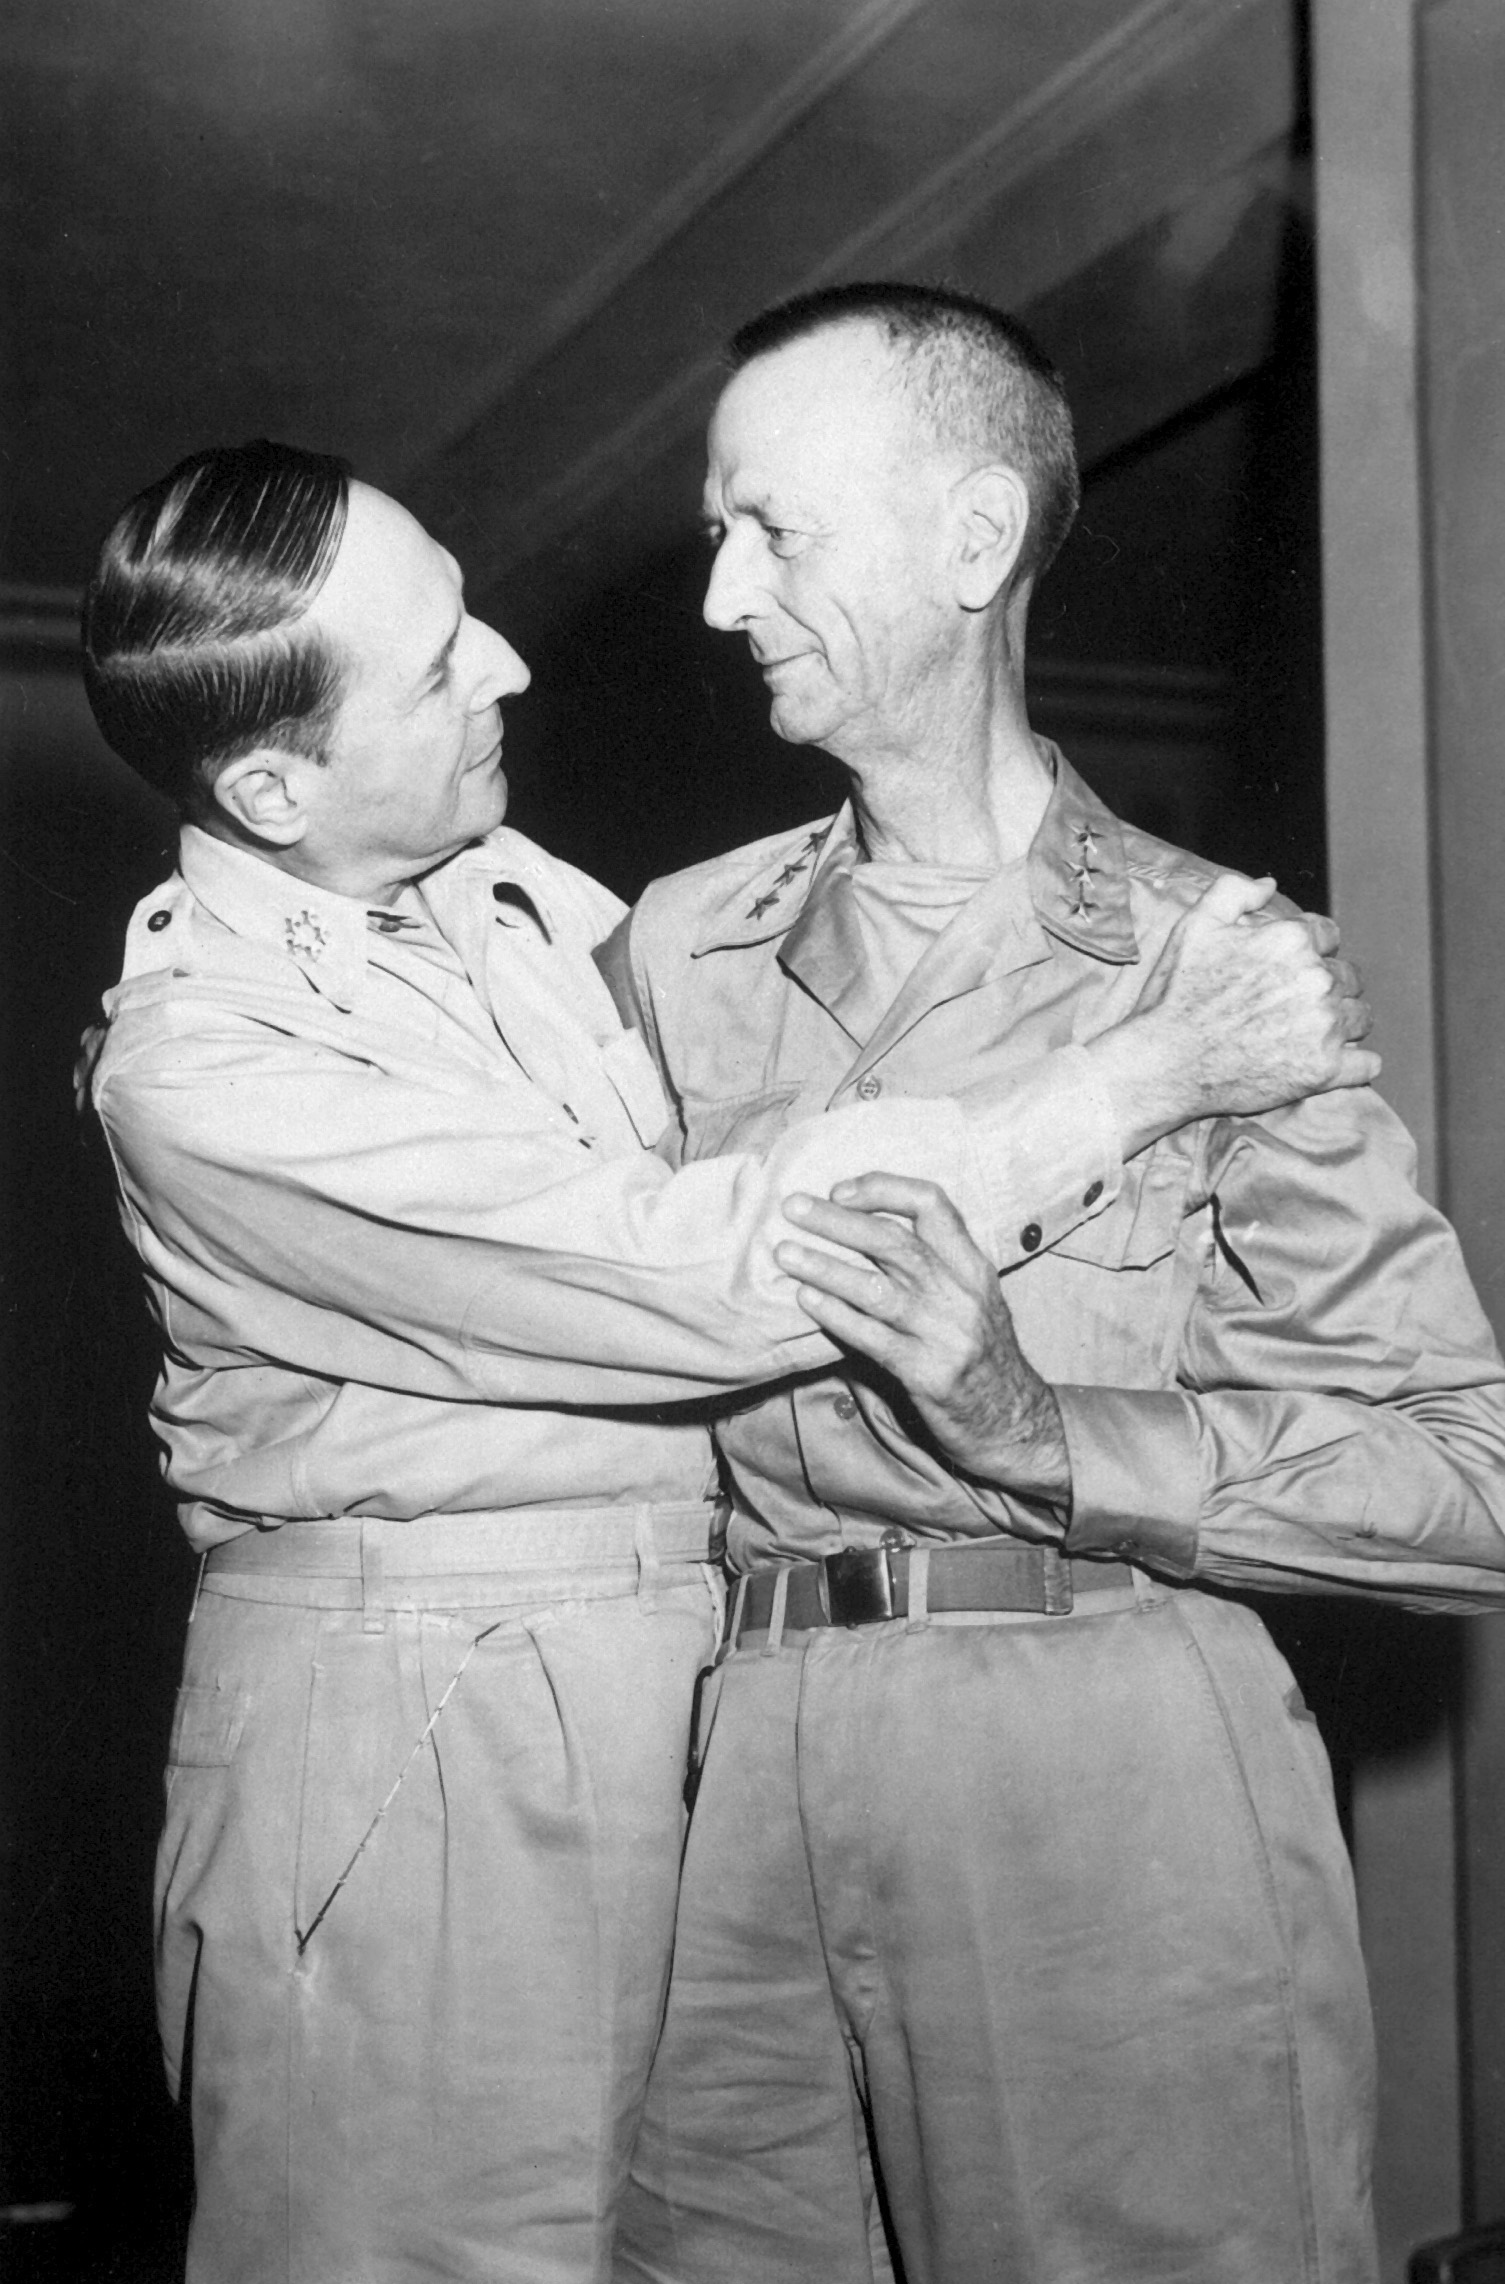 MacArthur embracing Wainwright, the New Grand Hotel, Yokohama, Japan, 31 Aug 1945